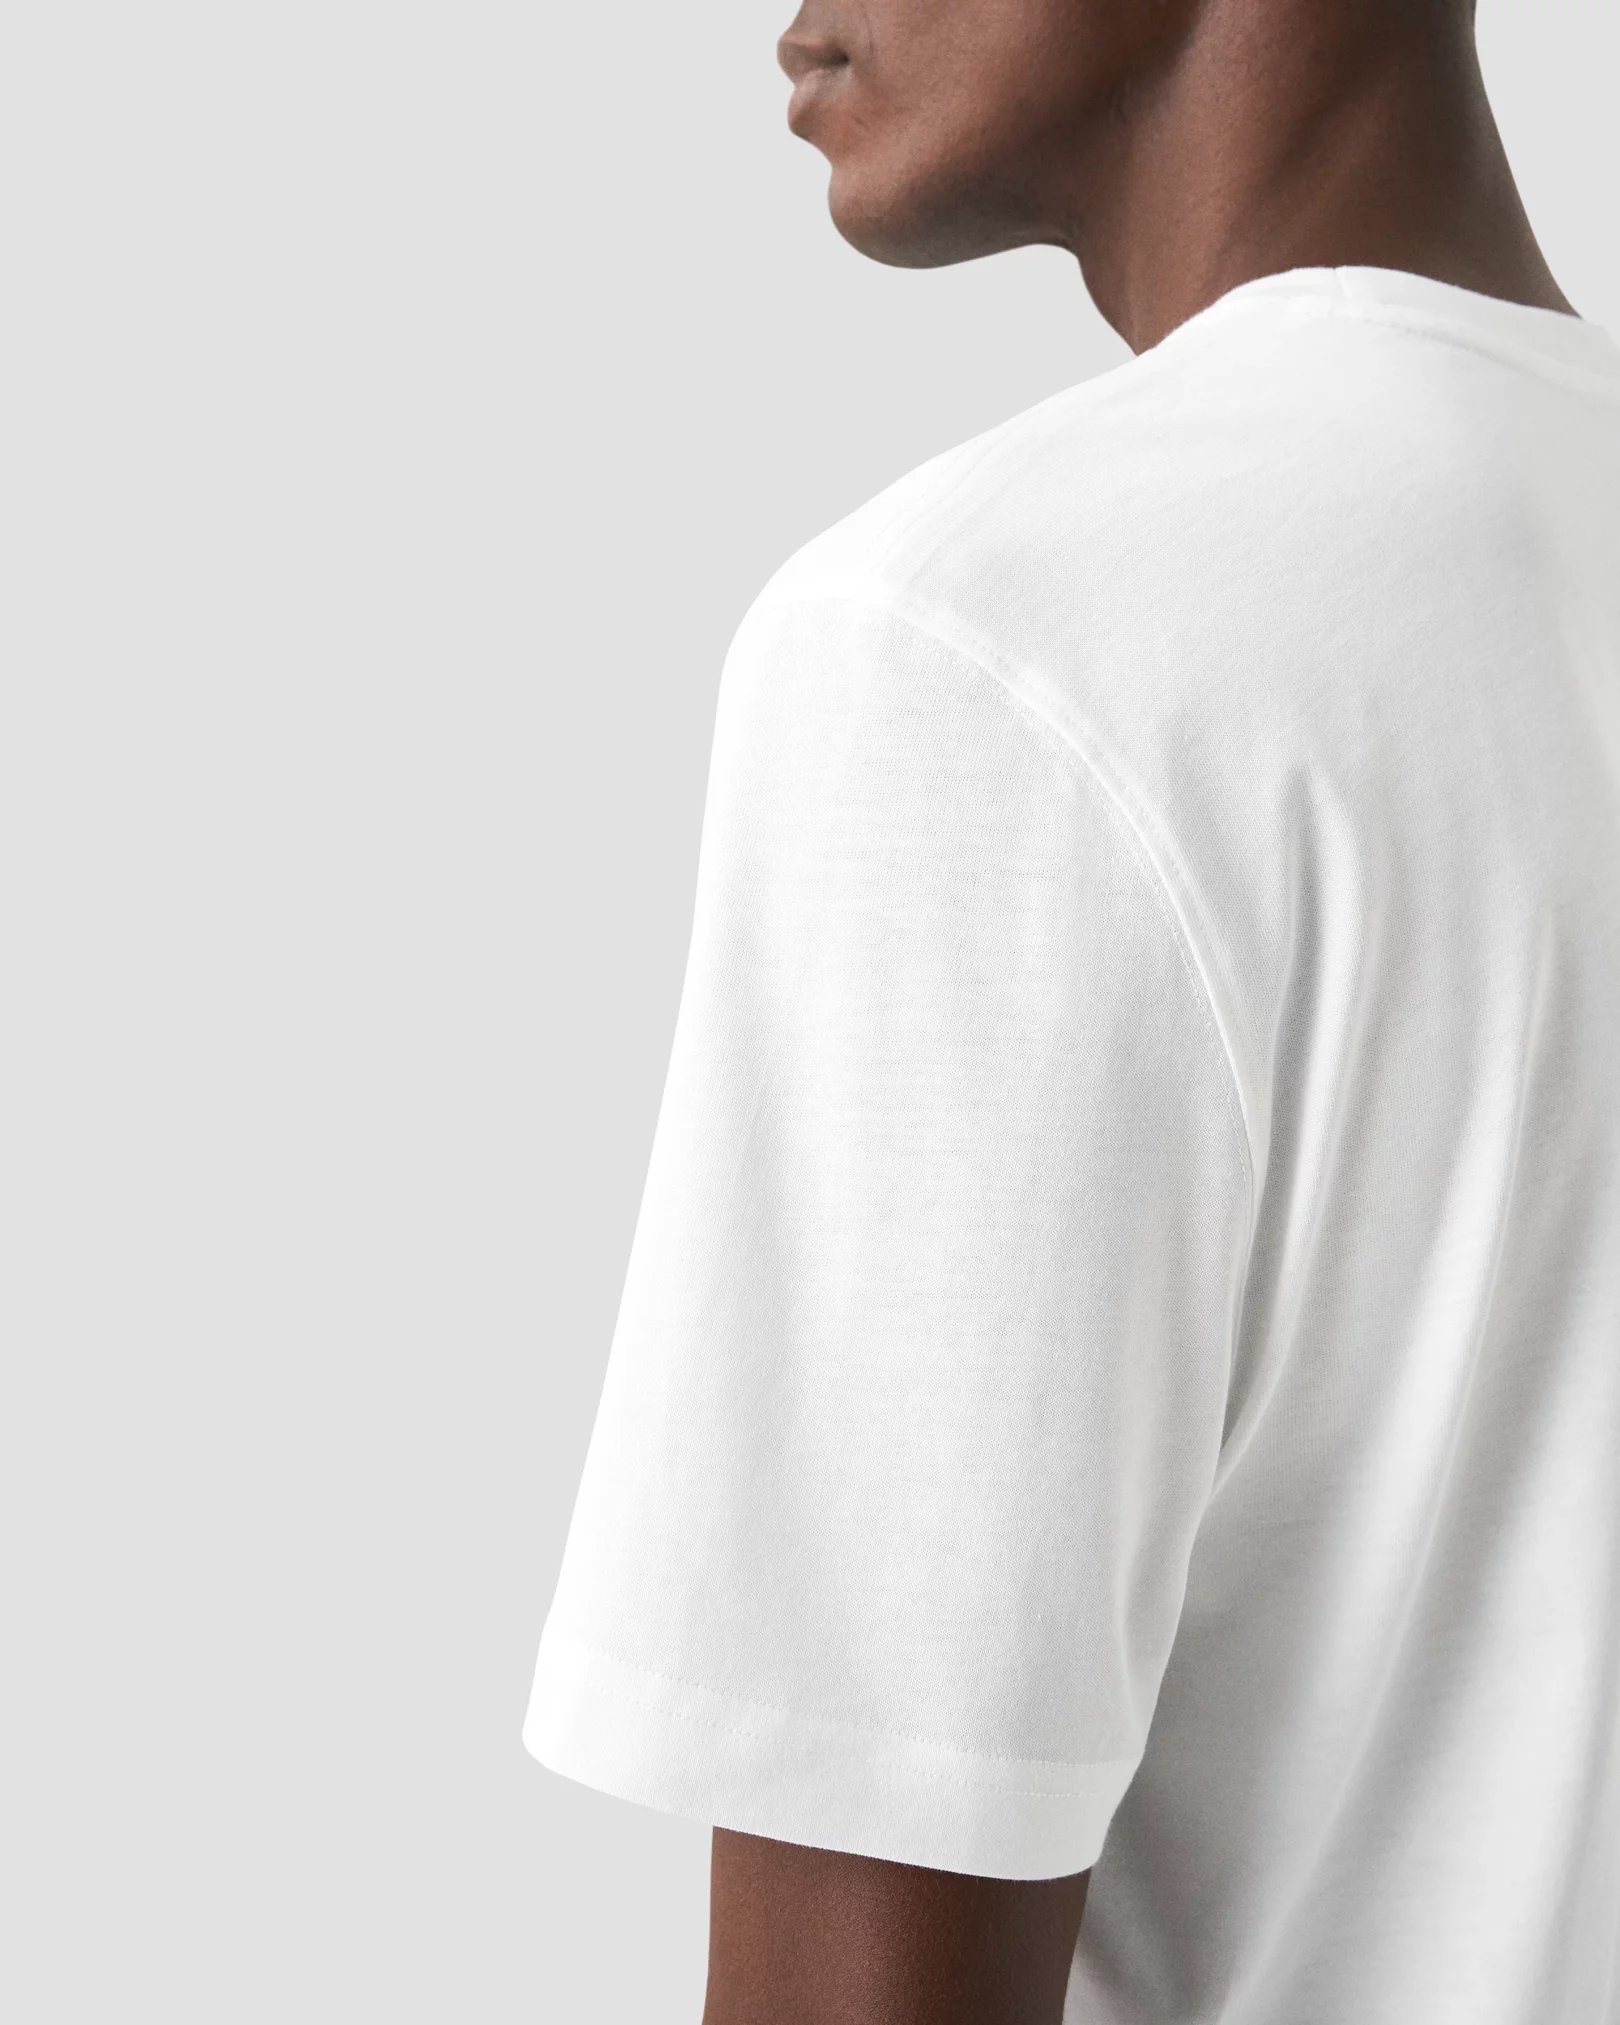 Eton - white t shirt